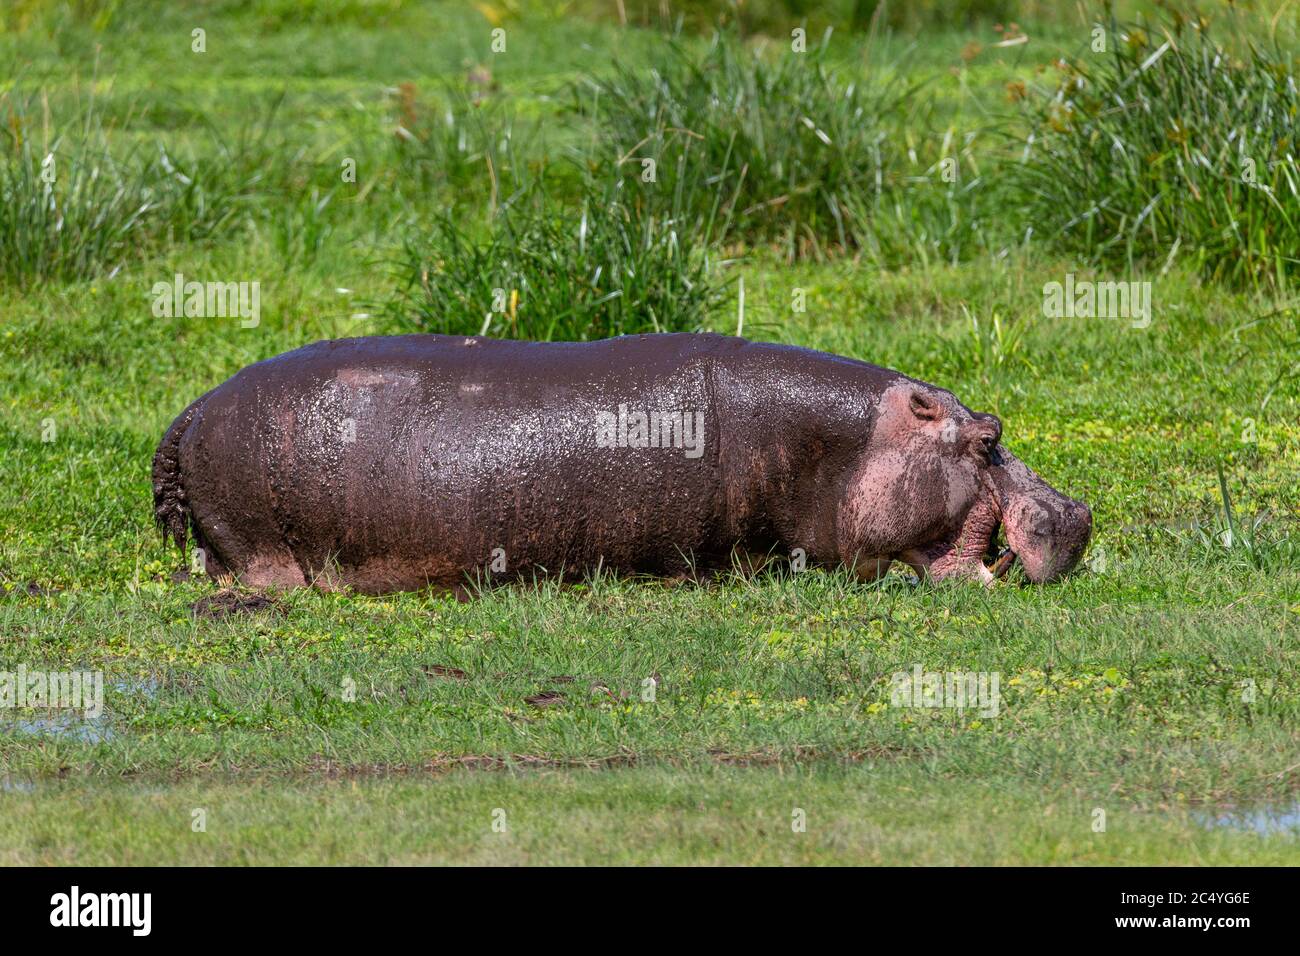 Common hippopotamus (Hippopotamus amphibius), Amboseli National Park, Kenya, Africa Stock Photo